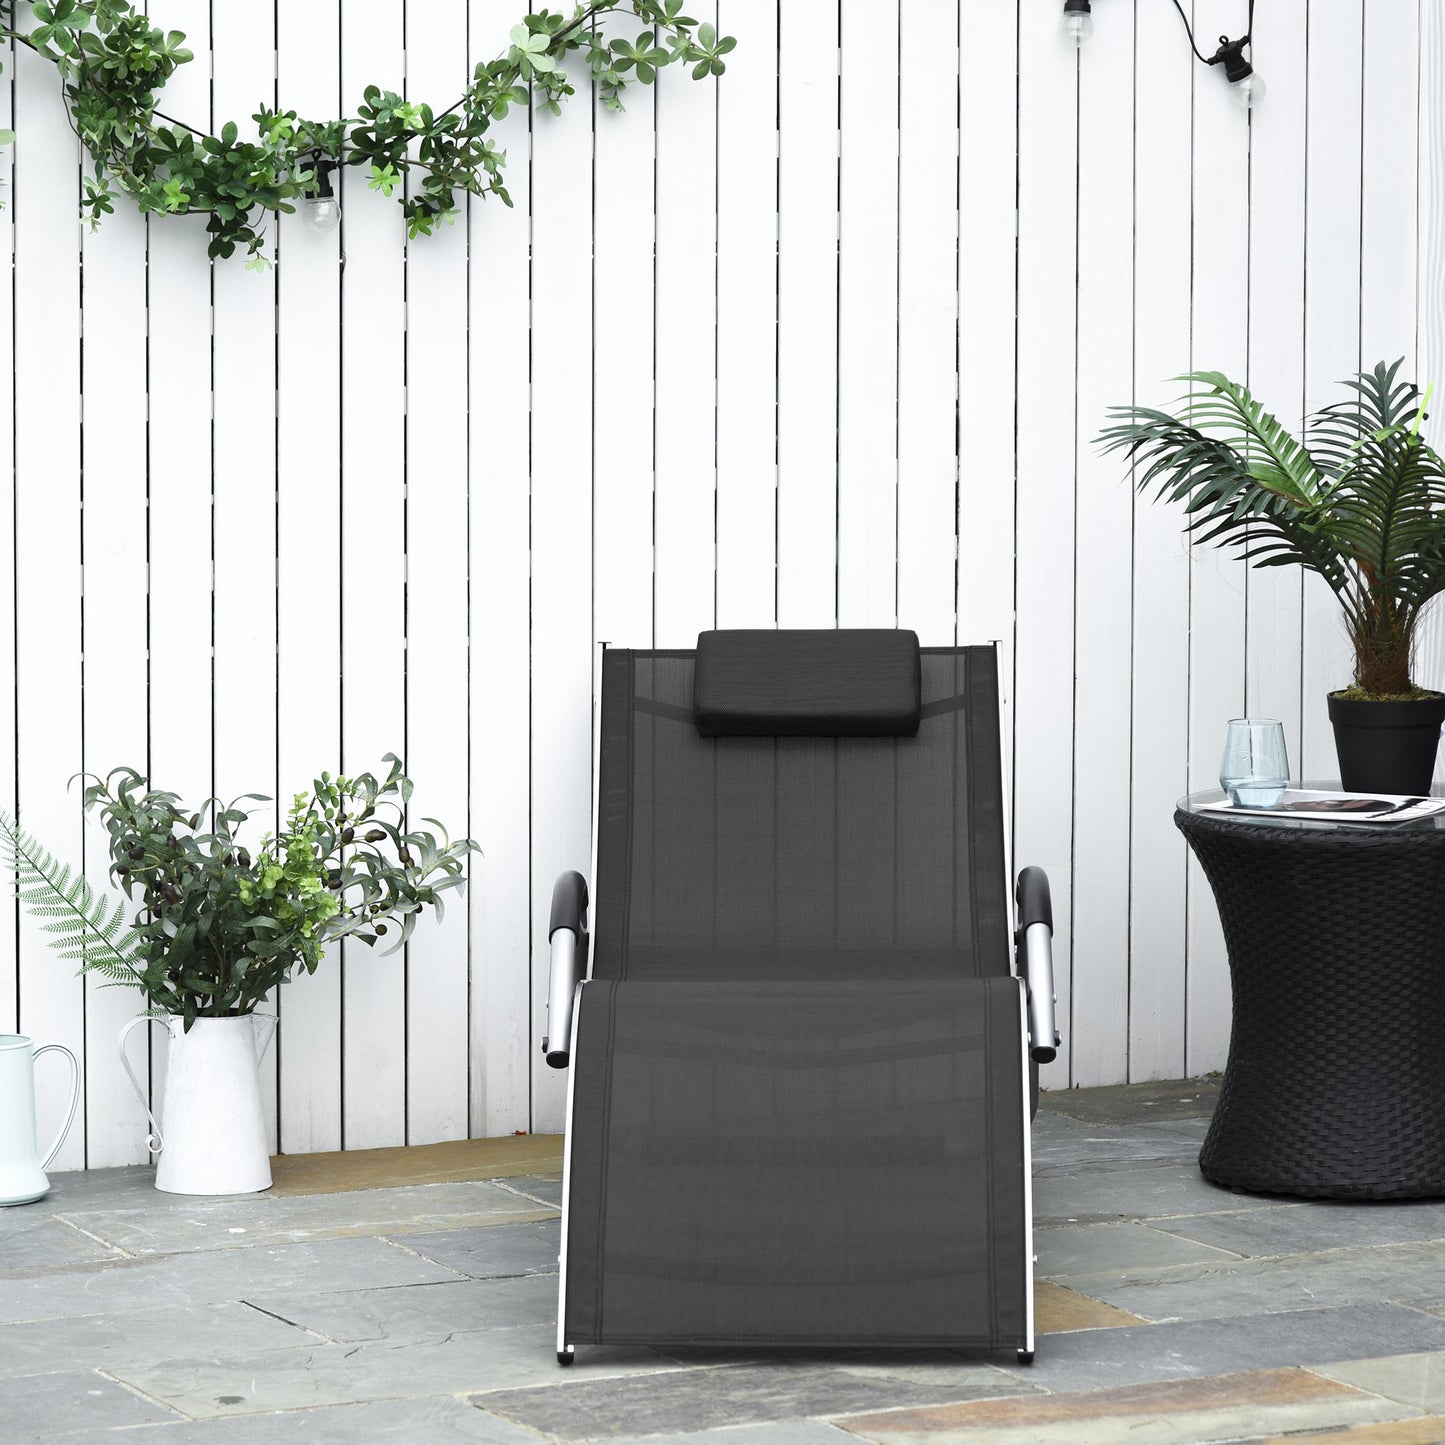 Chaise de jardin Fernandina Beach de Nancy - Chaise longue - Aluminium - Gris/Noir - 160 x 60 x 65 cm